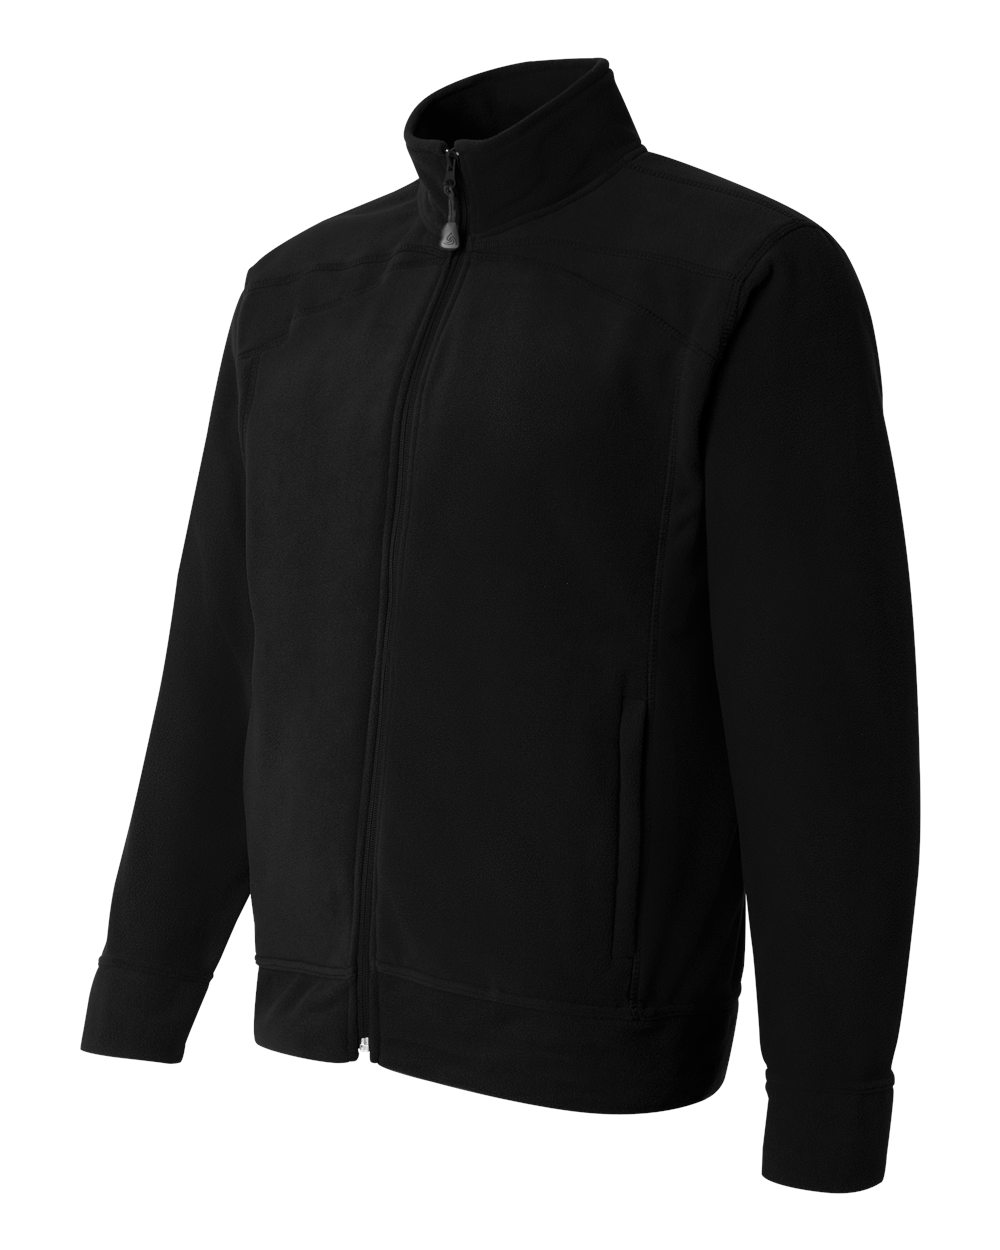 Colorado Clothing 5289 - Lightweight Microfleece Full-Zip Jacket